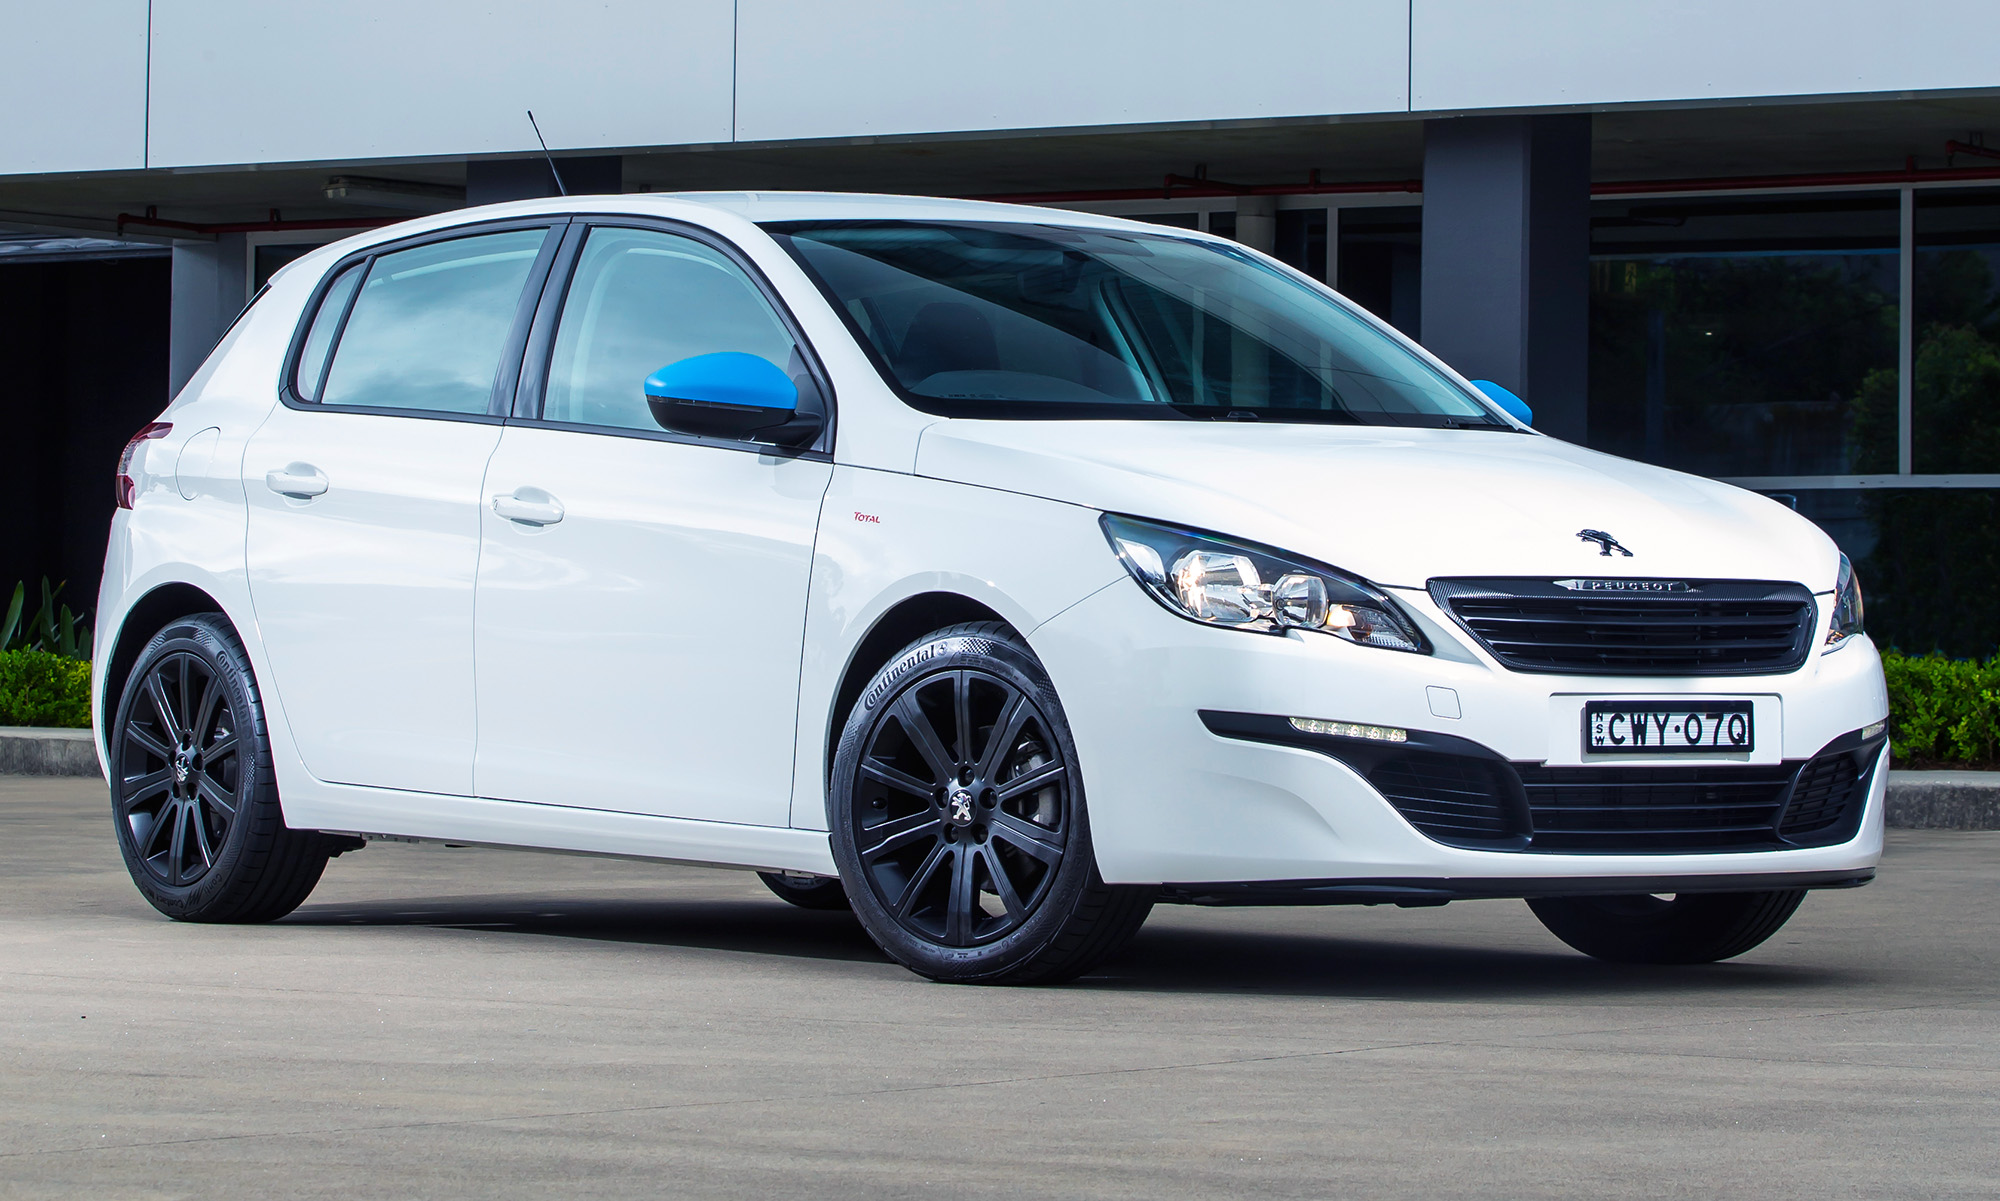 2015 Peugeot 308 Total Package limitededition lands in